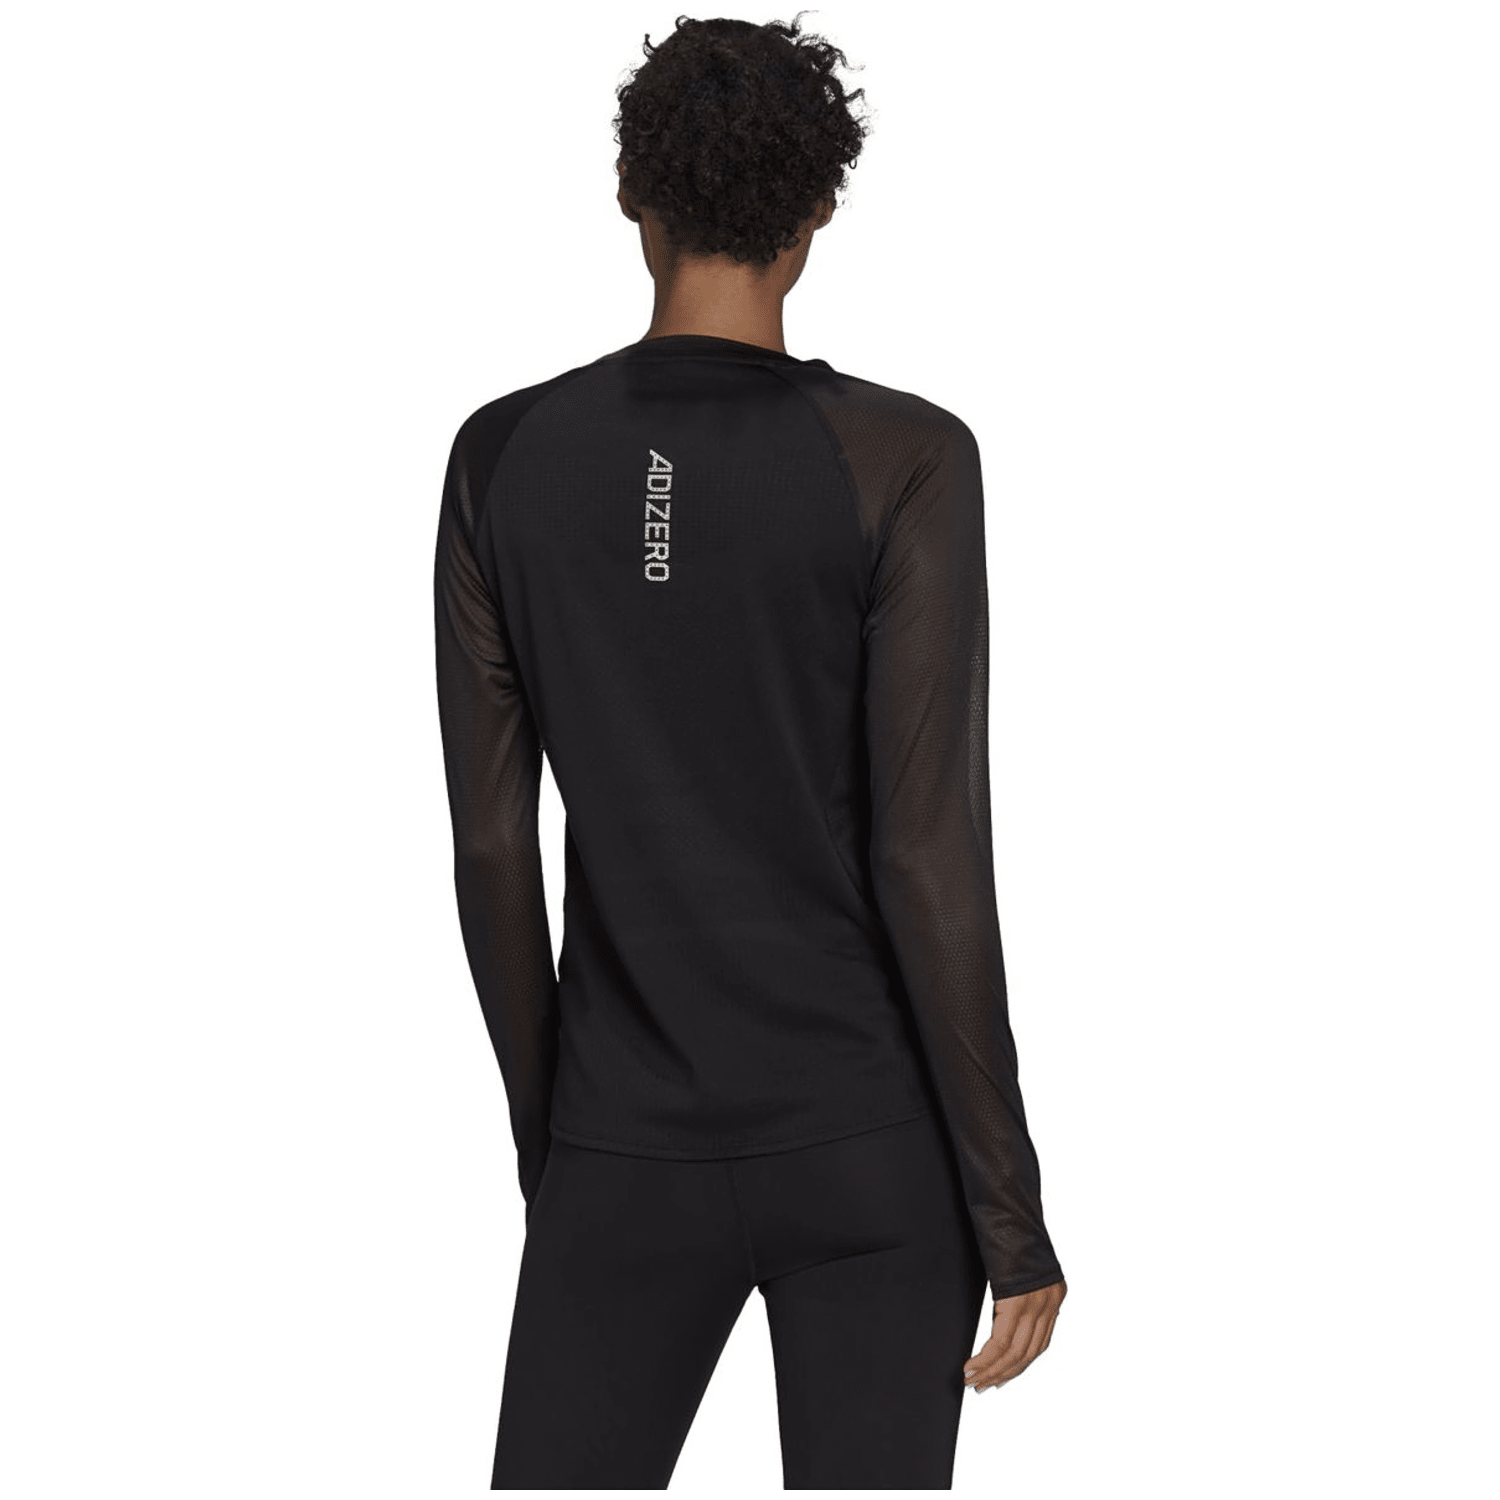 Adidas Parley Adizero Long Sleeve Running T-Shirt Damen